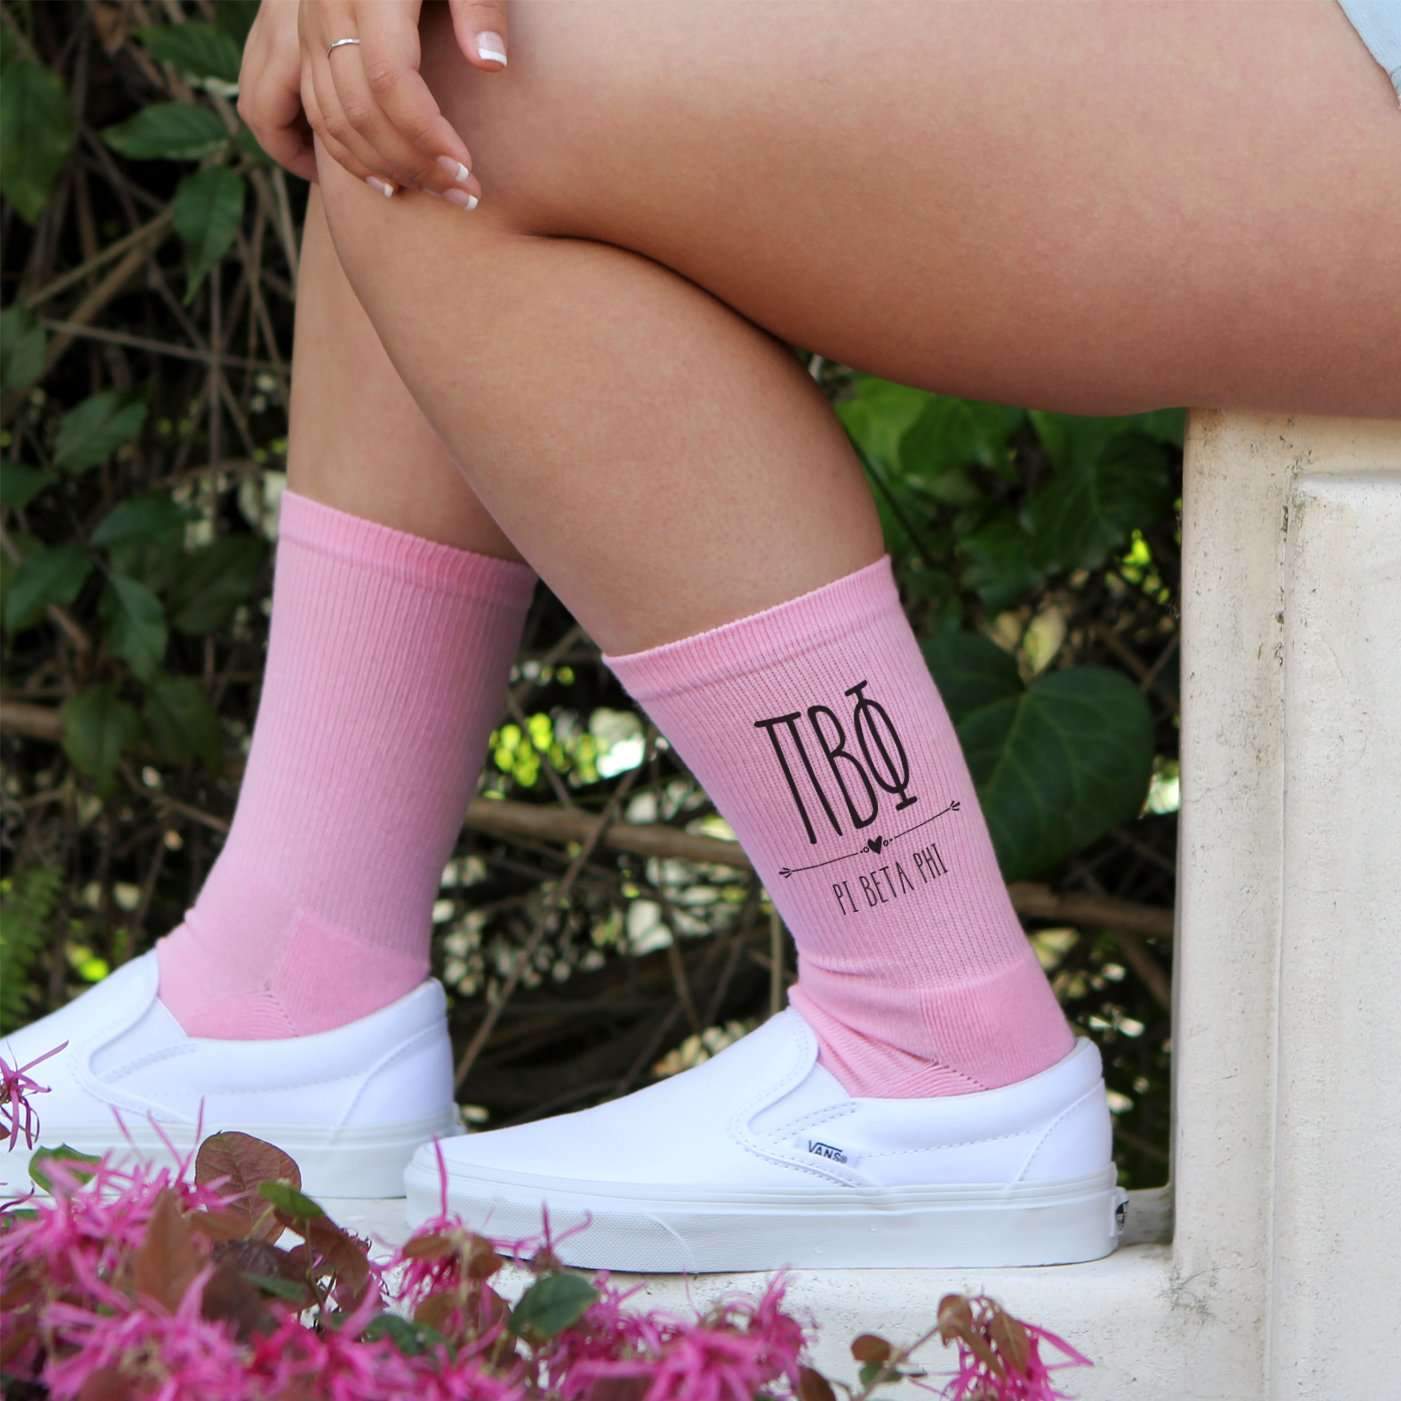 Pi Beta Phi sorority name and letters custom printed on pink cotton crew socks